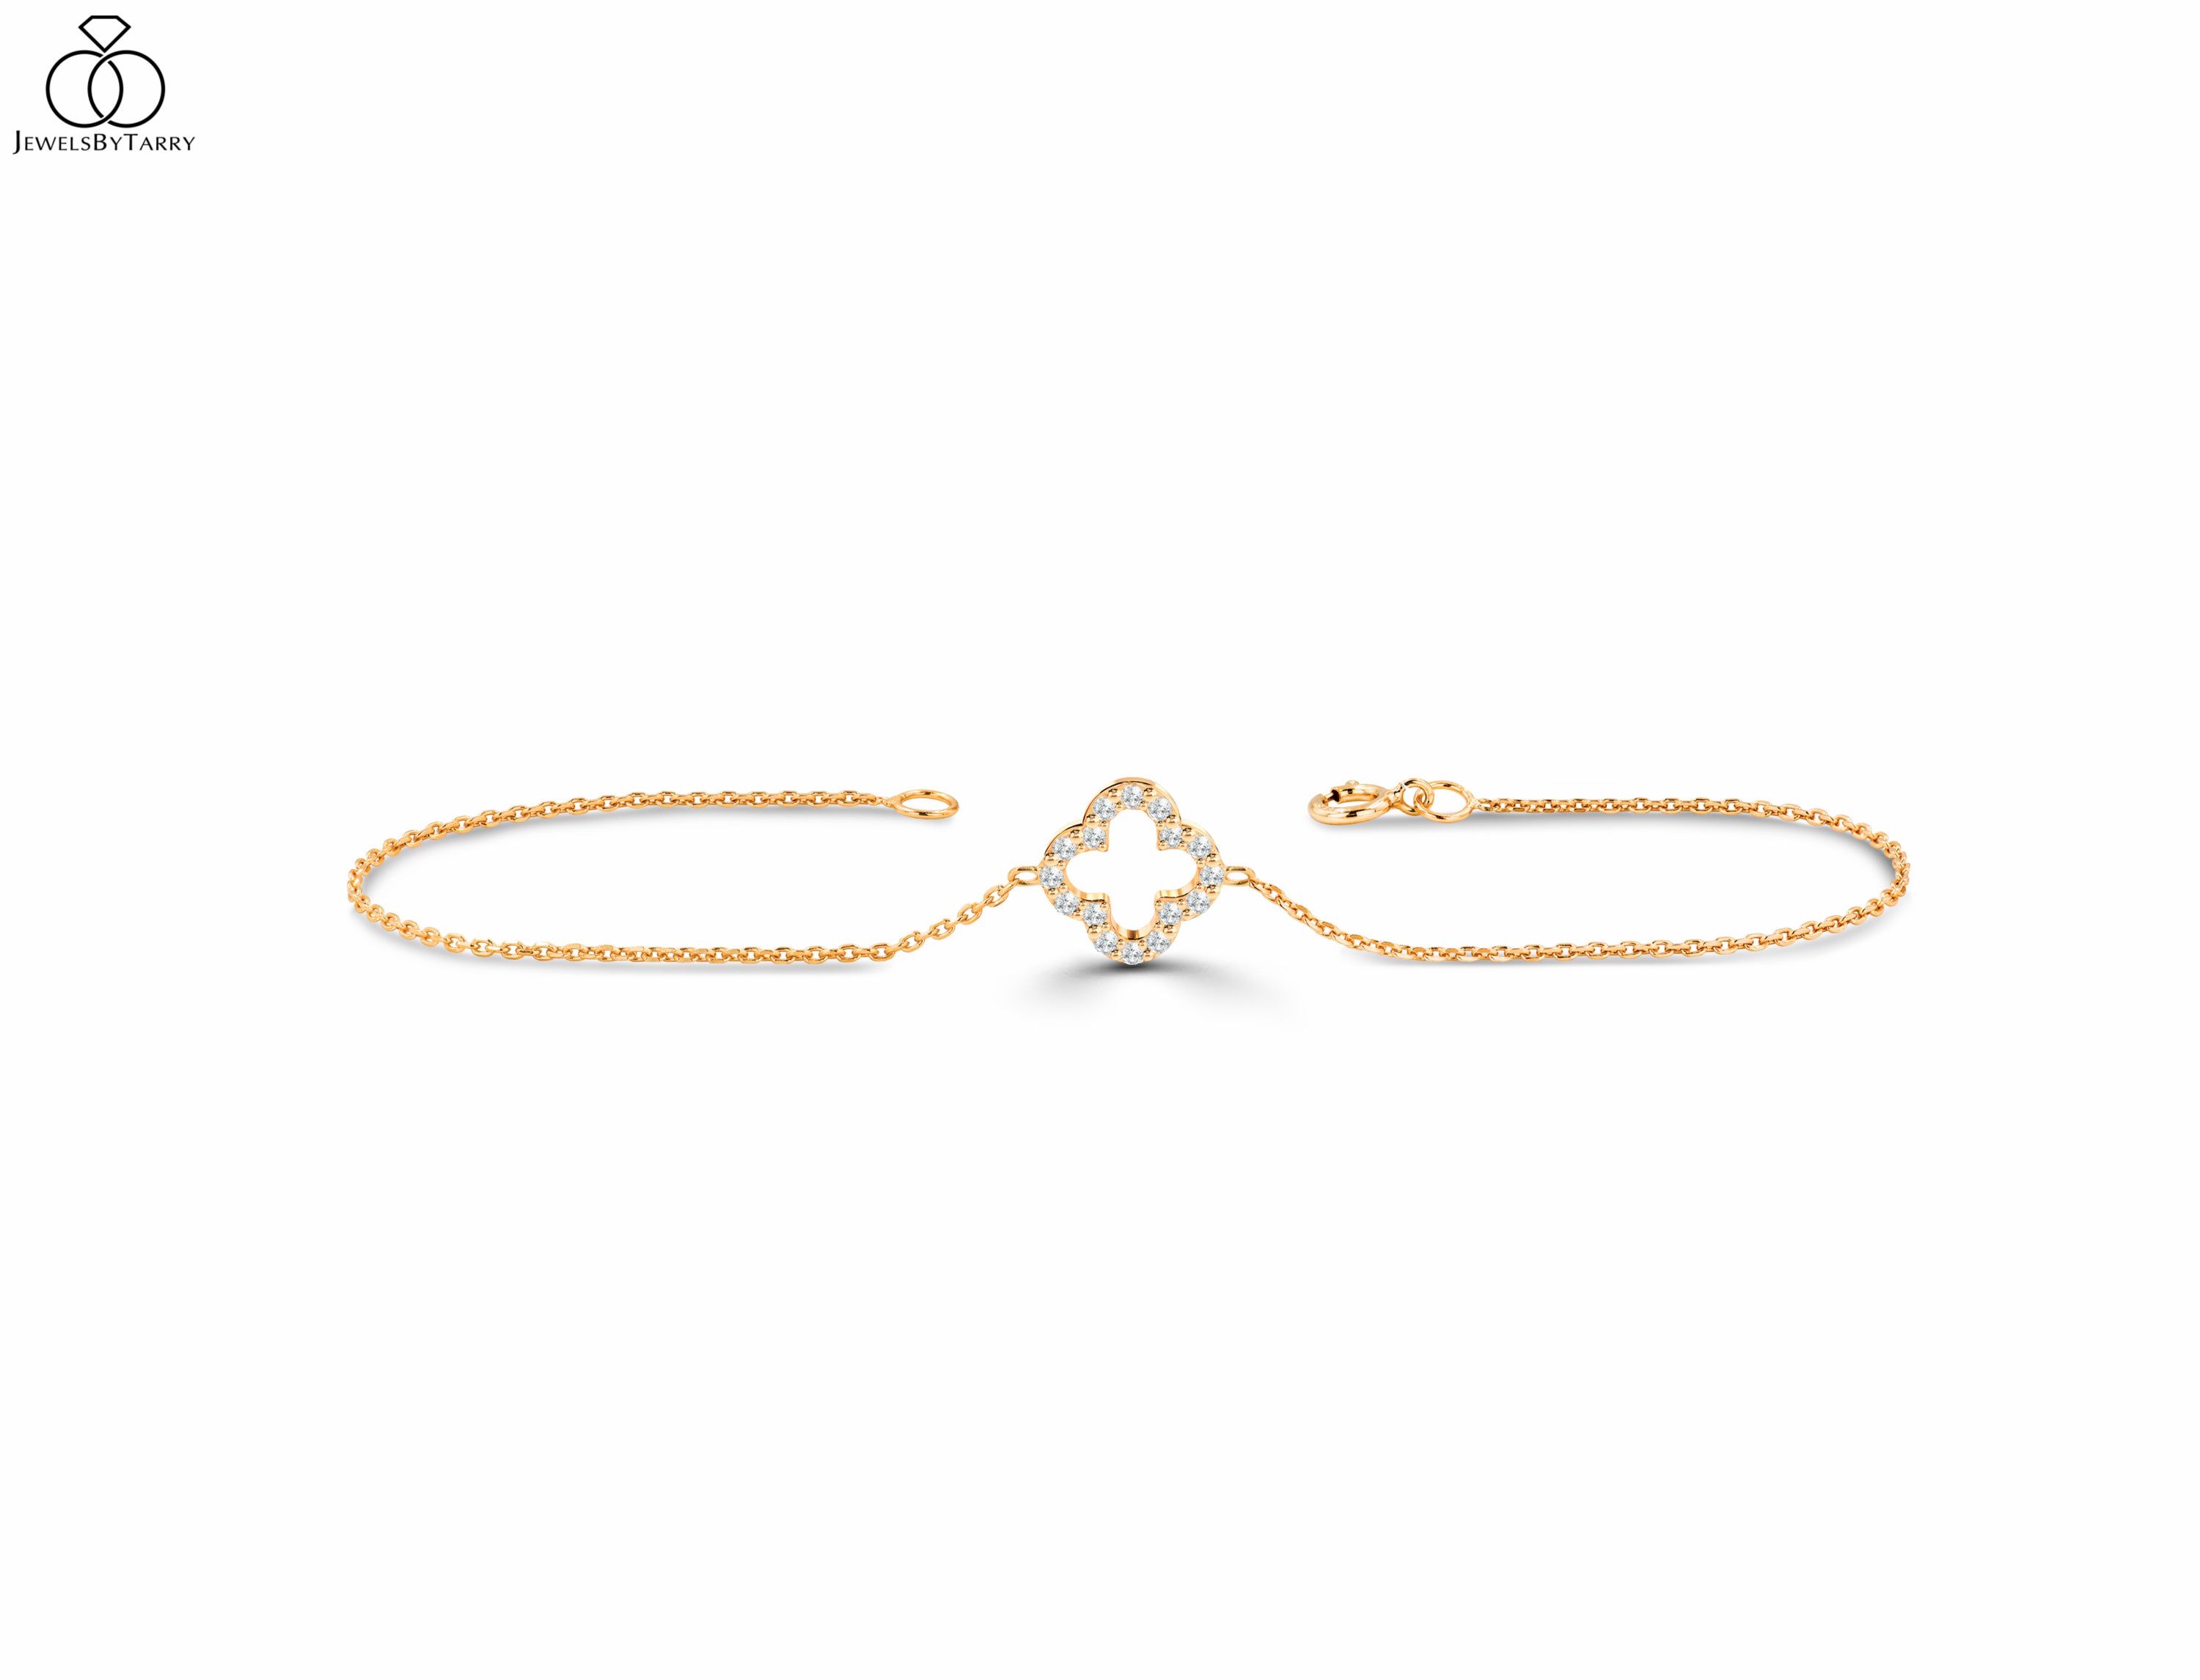 Louis Vuitton 18K Diamond Star Blossom Right Earring